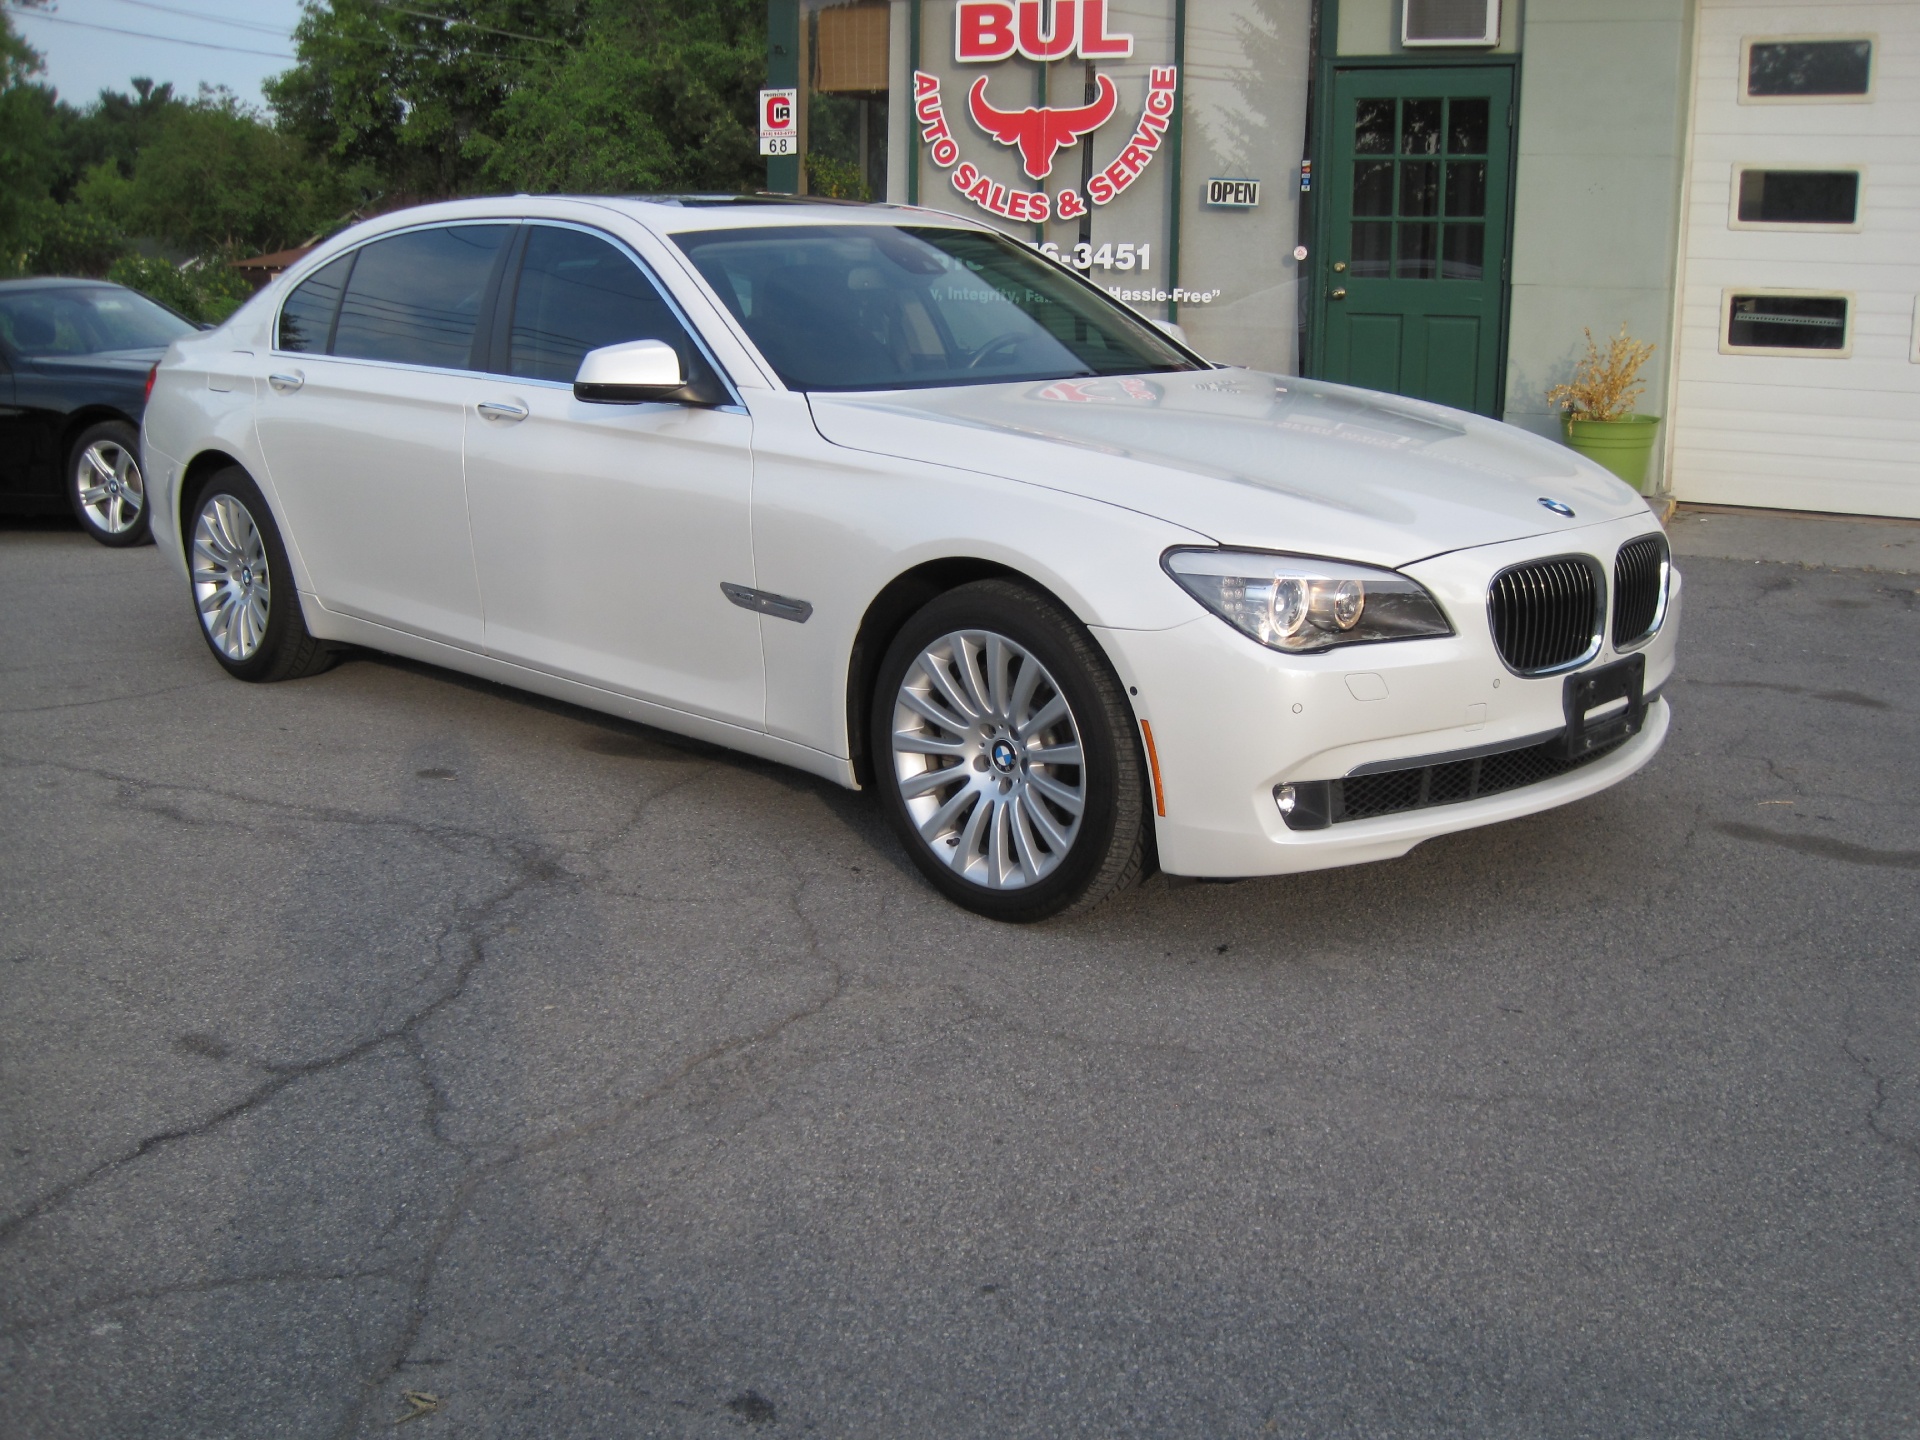 2012 BMW 7 Series For Sale $44990 | 15082 Bul Auto NY